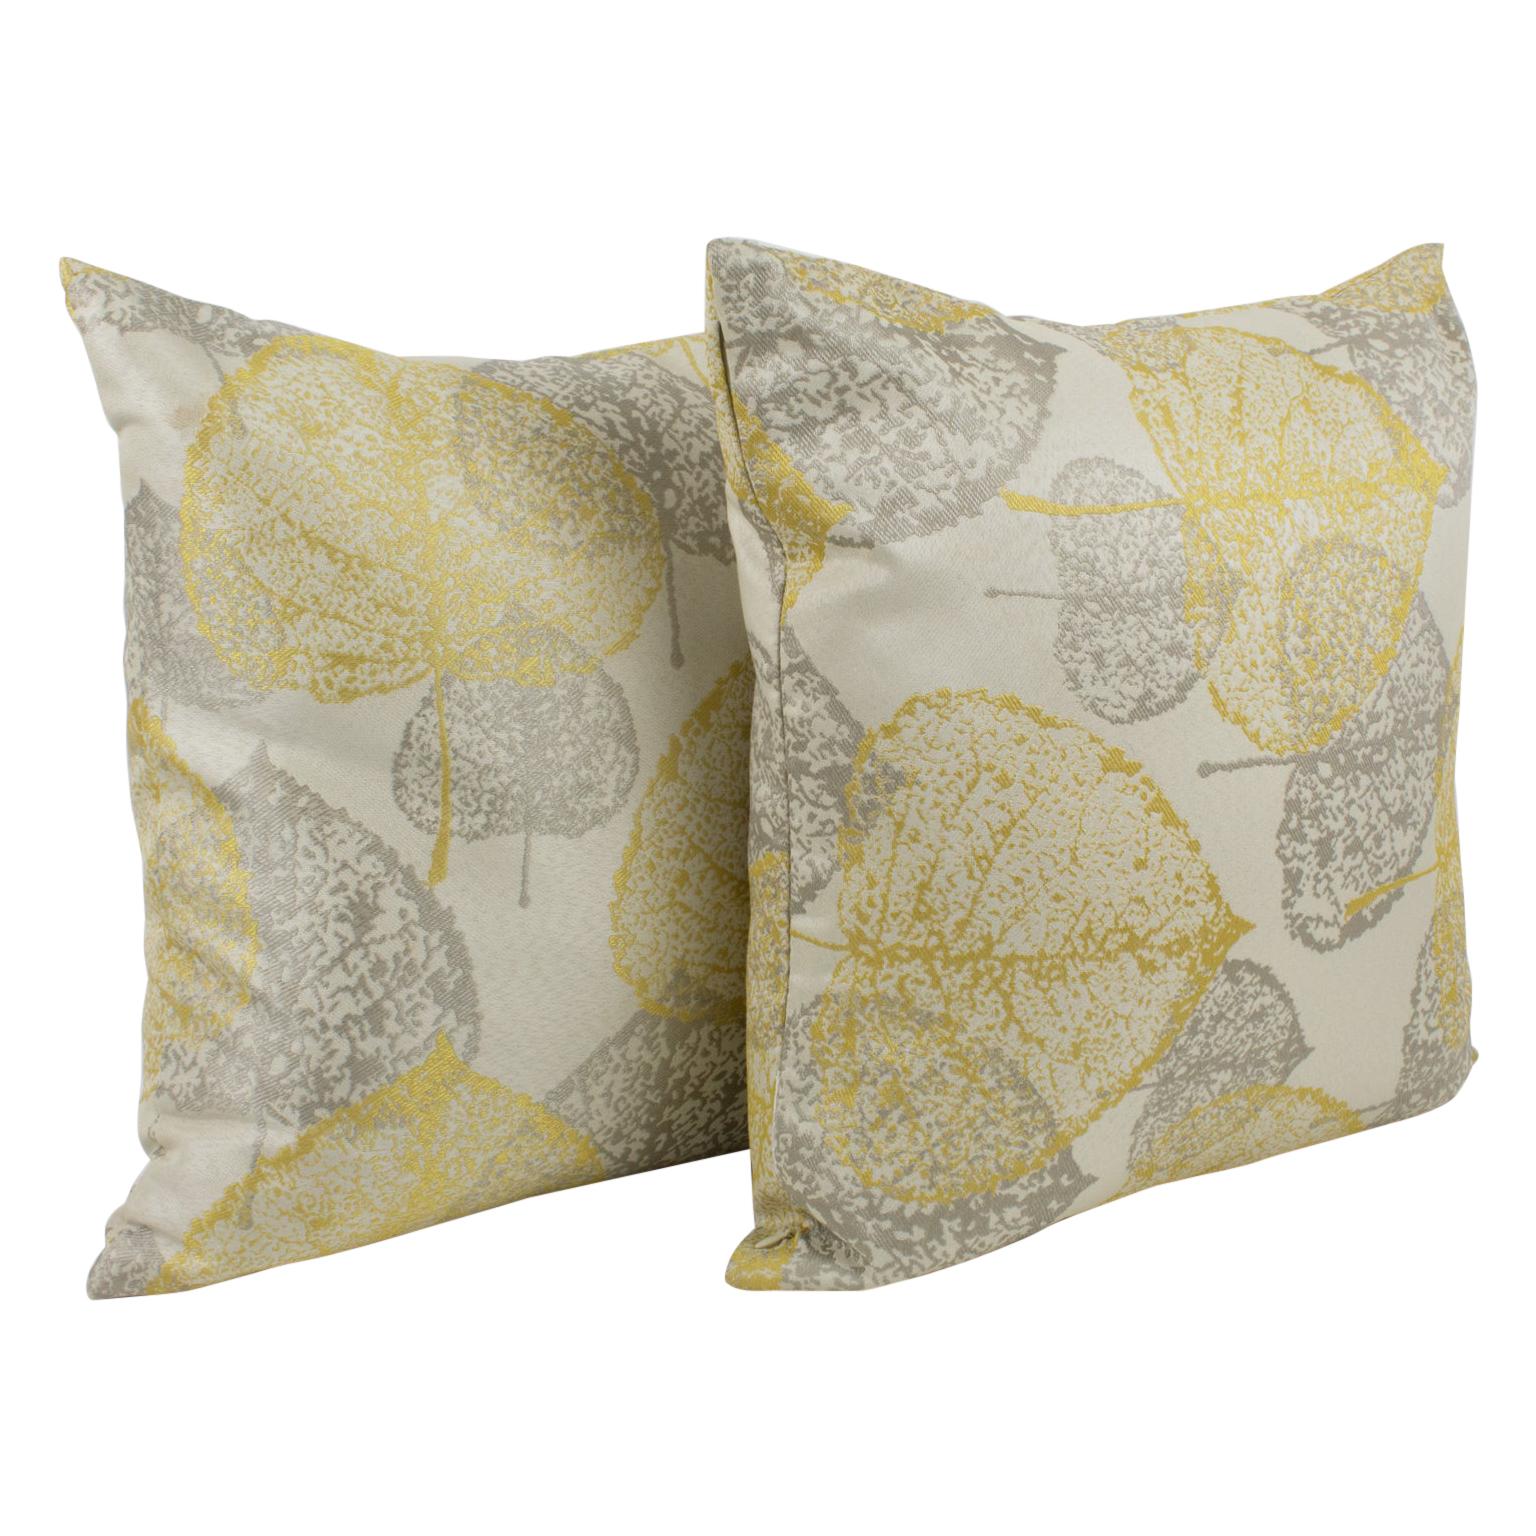 Yellow Silver-Gray Damask Throw Pillow, a pair